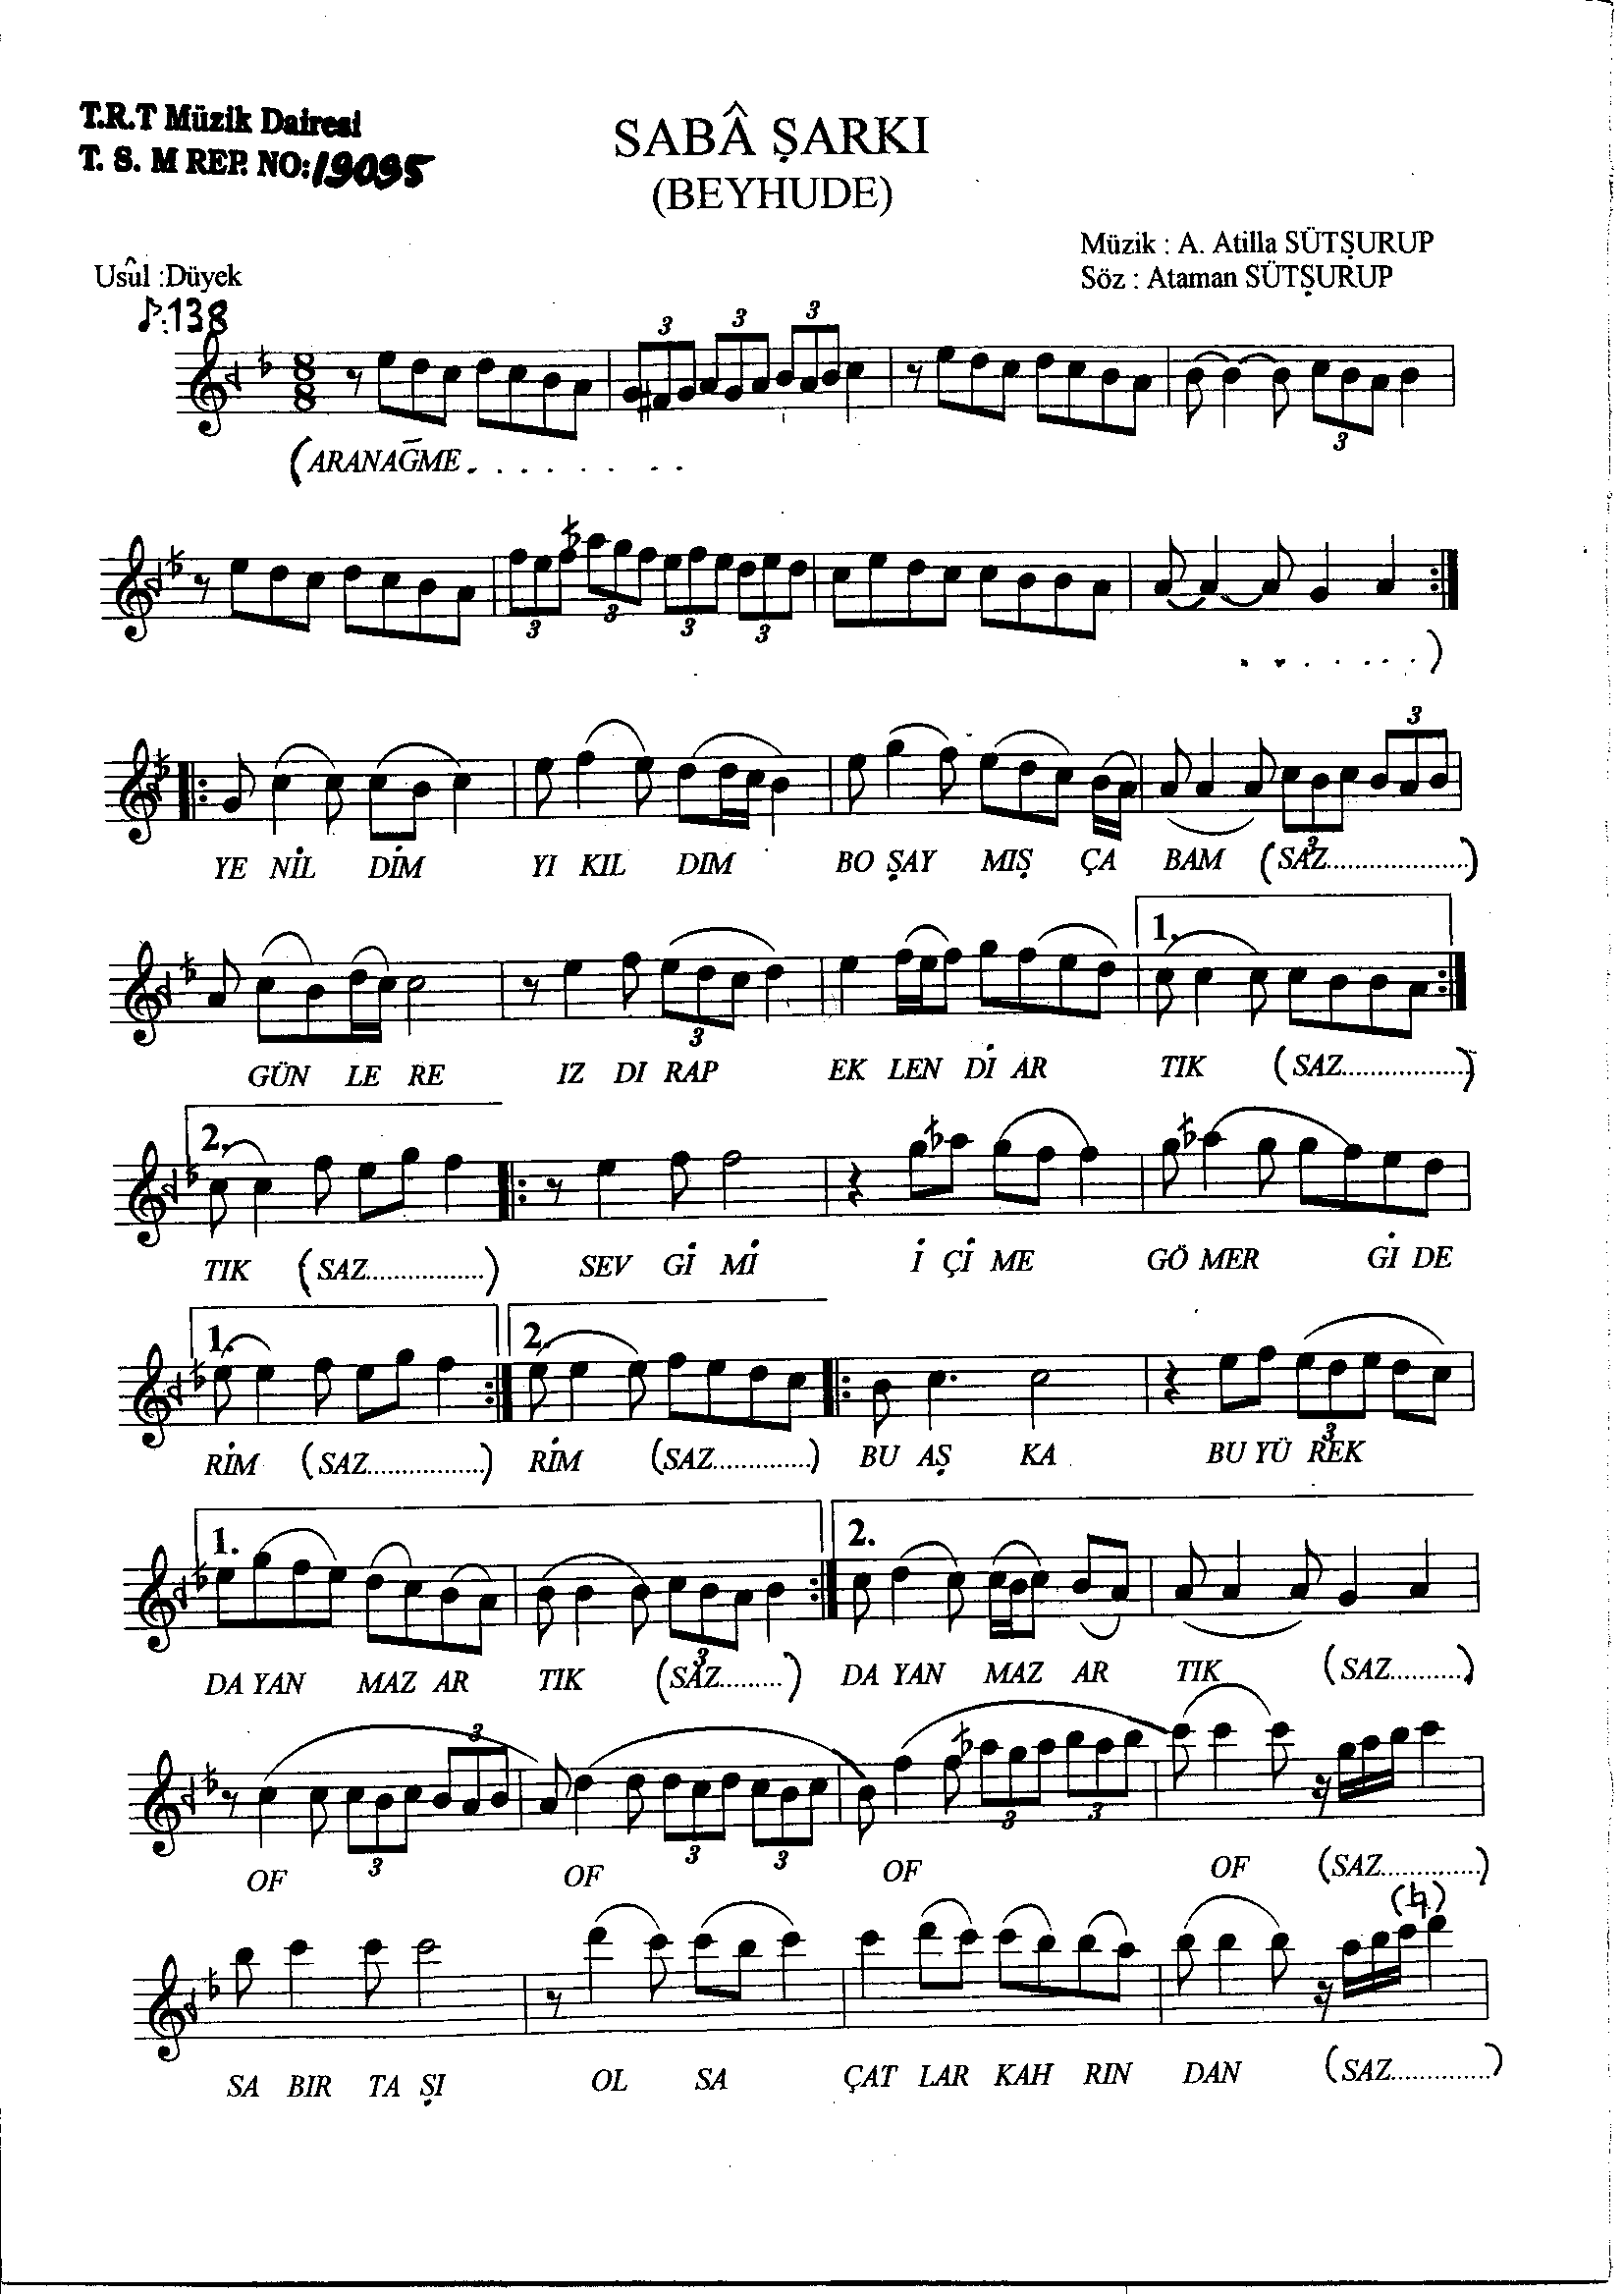 Sabâ - Şarkı - A.Atilla Sütşurup - Sayfa 1